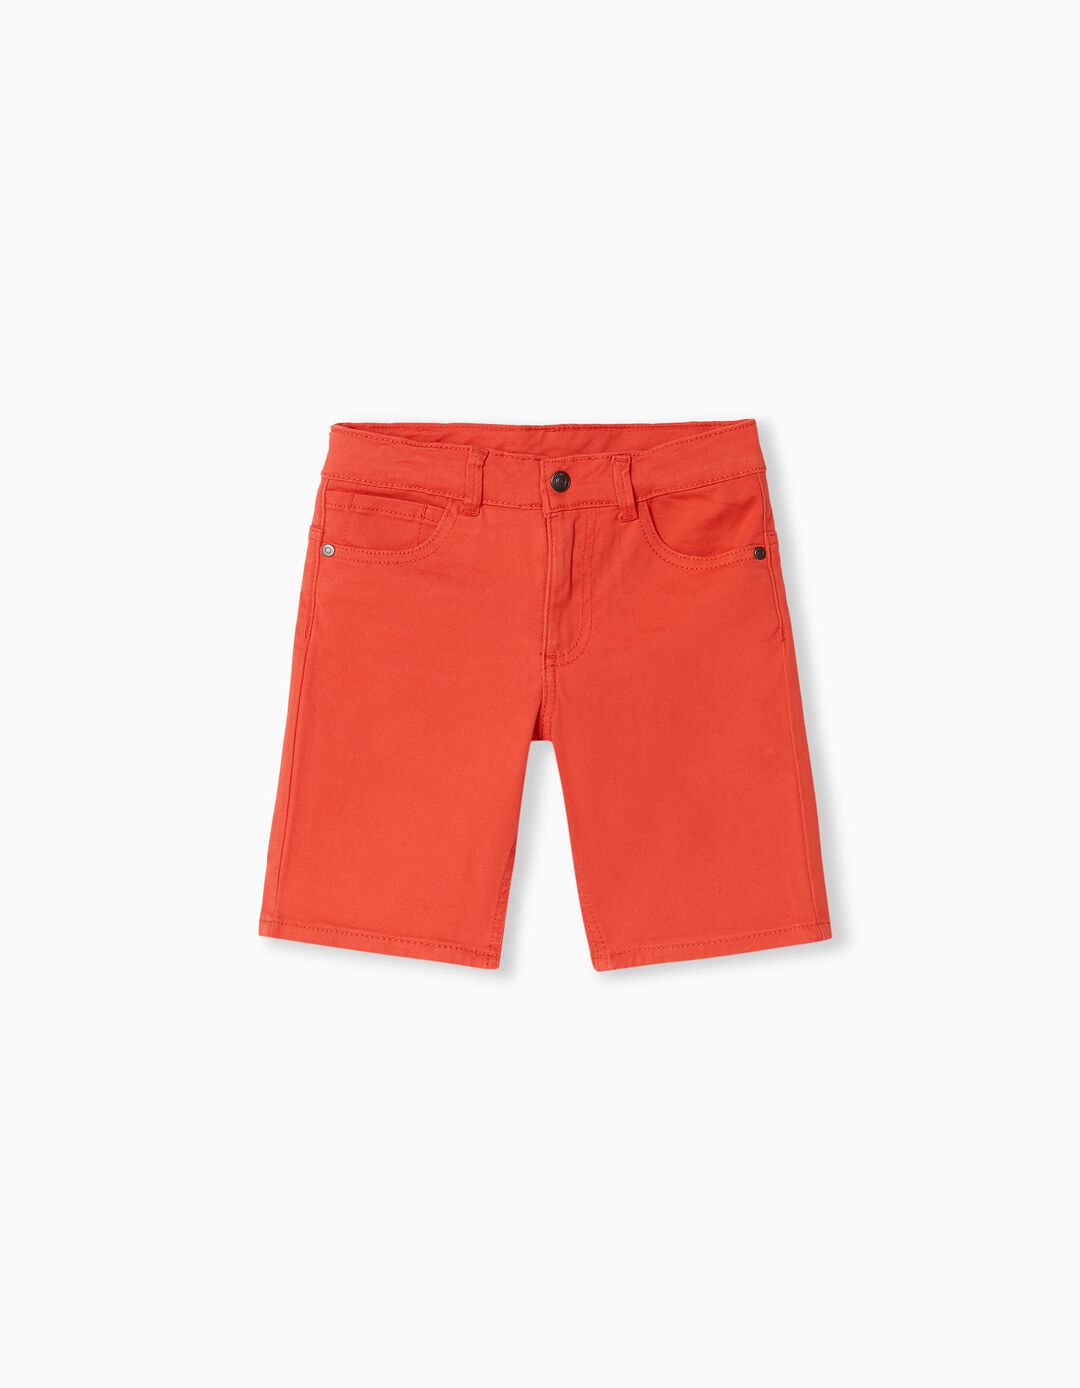 Shorts, Boys, Dark Orange